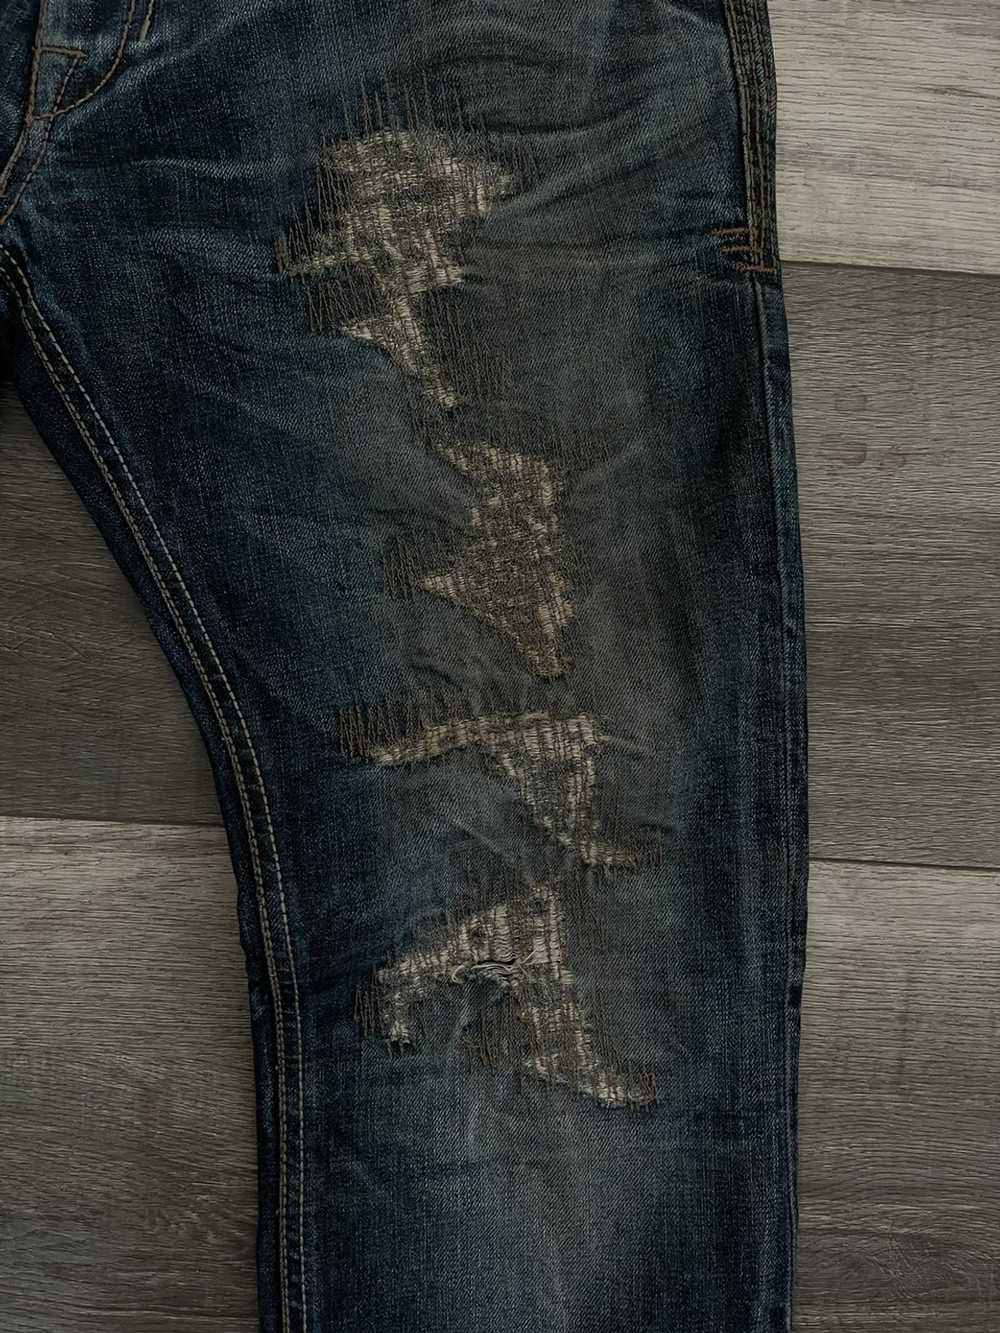 PPFM Buckaroo indigo jeans - image 3